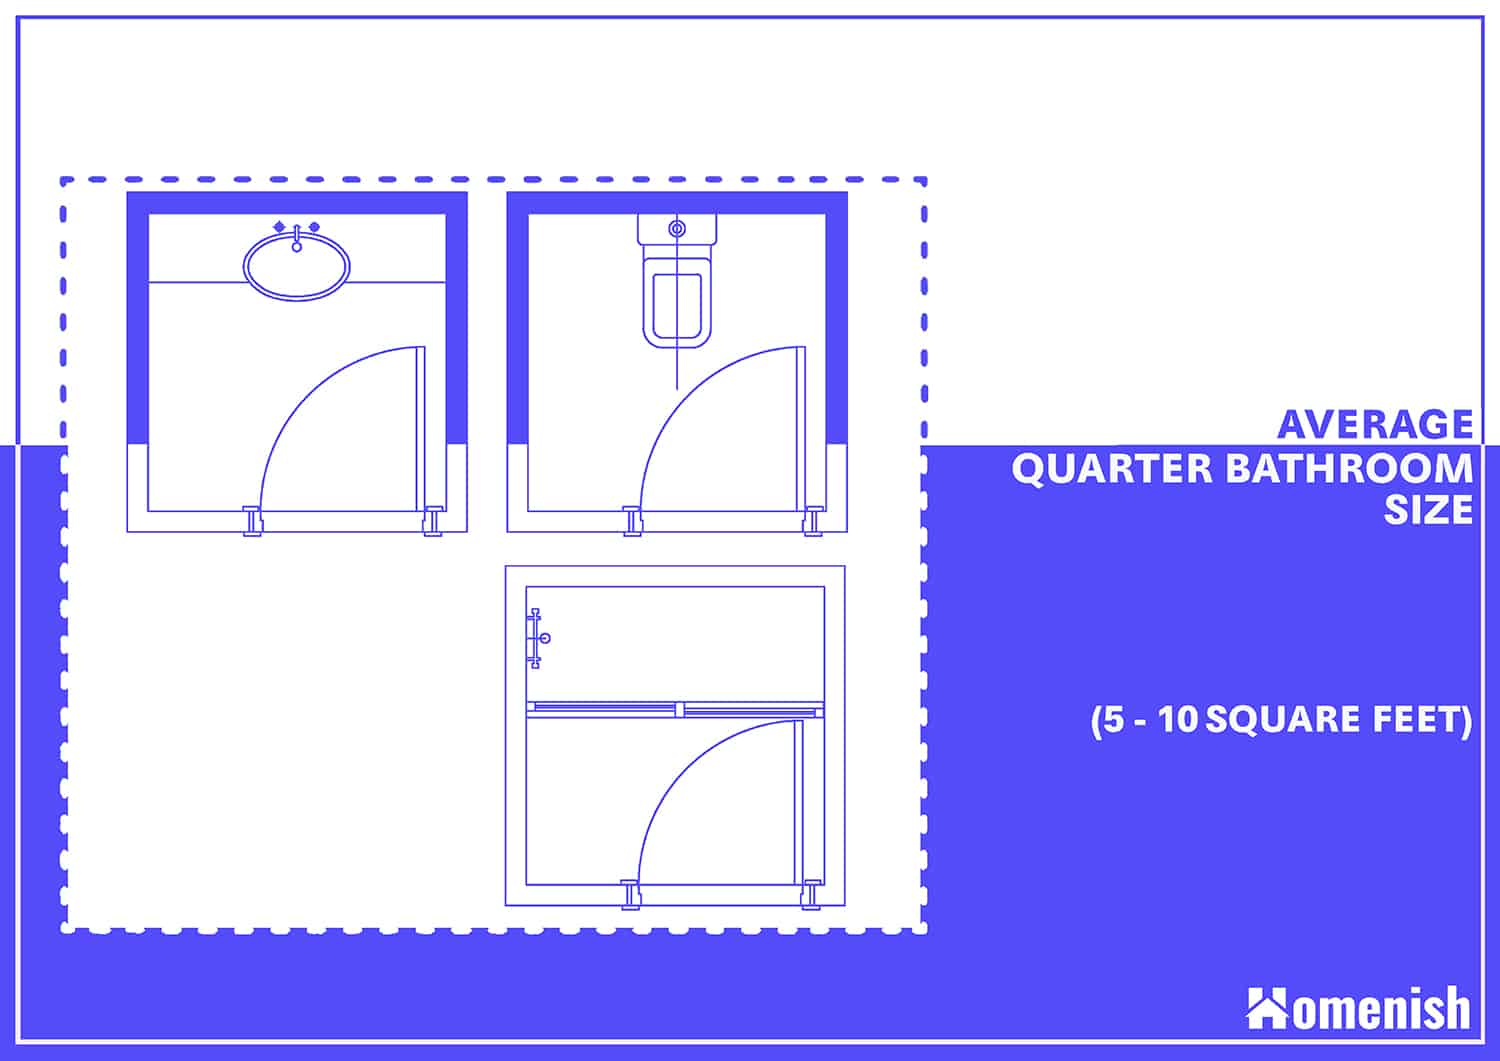 Average Quarter Bathroom Size